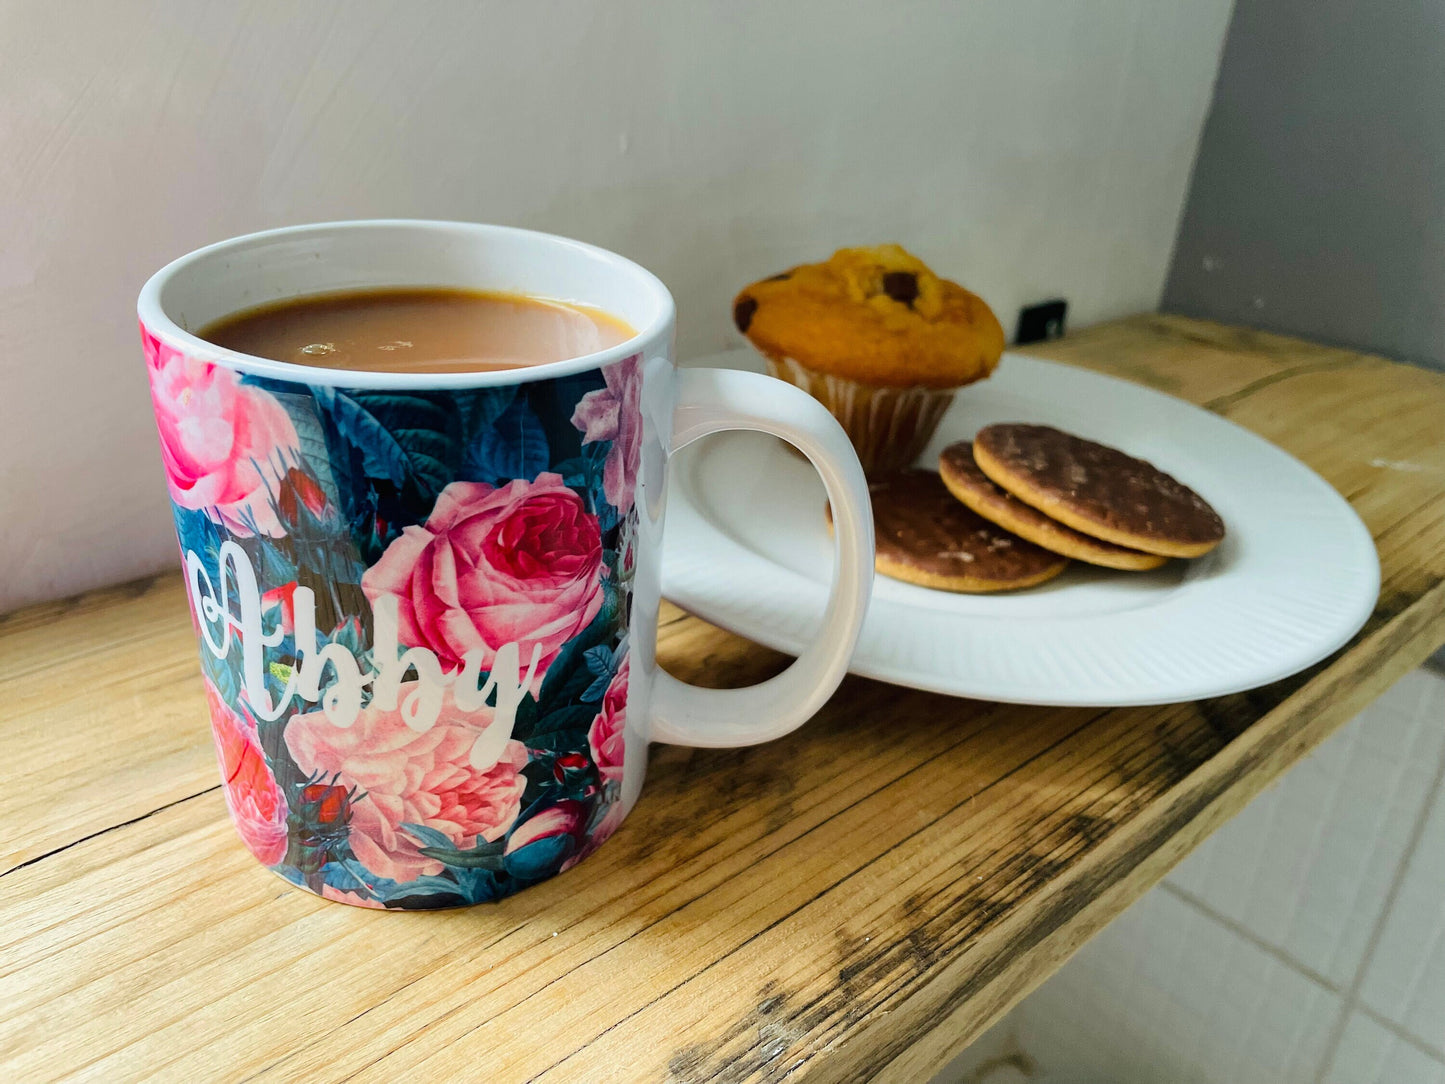 Personalised English Rose Tea or Coffee Mug, Botanical Decor Gift for Coffee Lover, Custom Printed Rose Cup with Name, Dishwasher Safe Mug